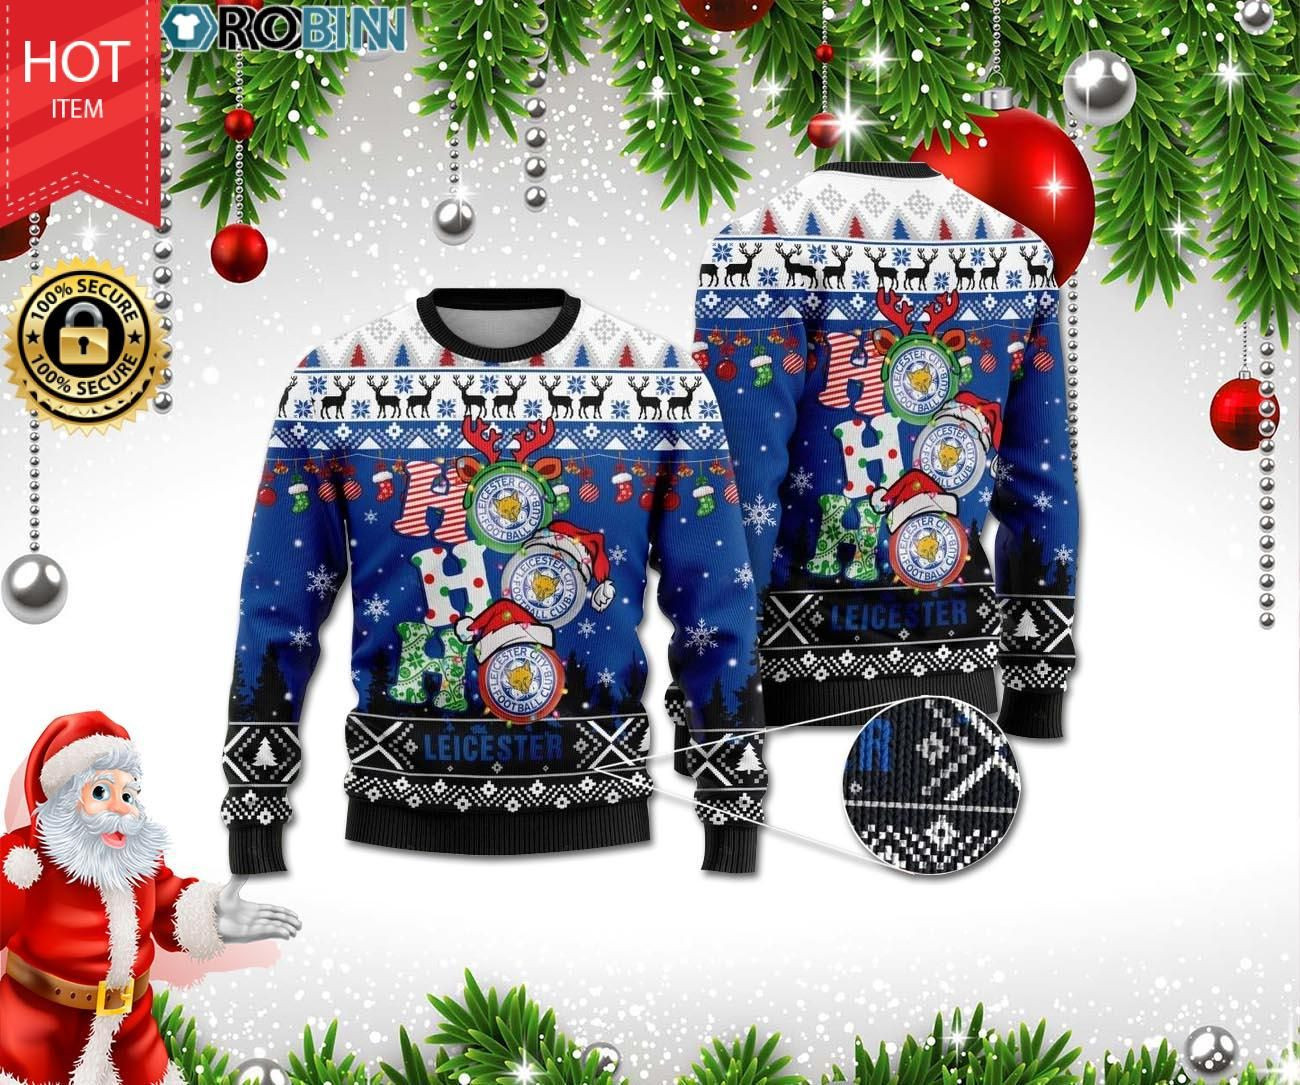 Leicester Ho Ho Ho 3D Print Christmas Wool Sweater Ugly